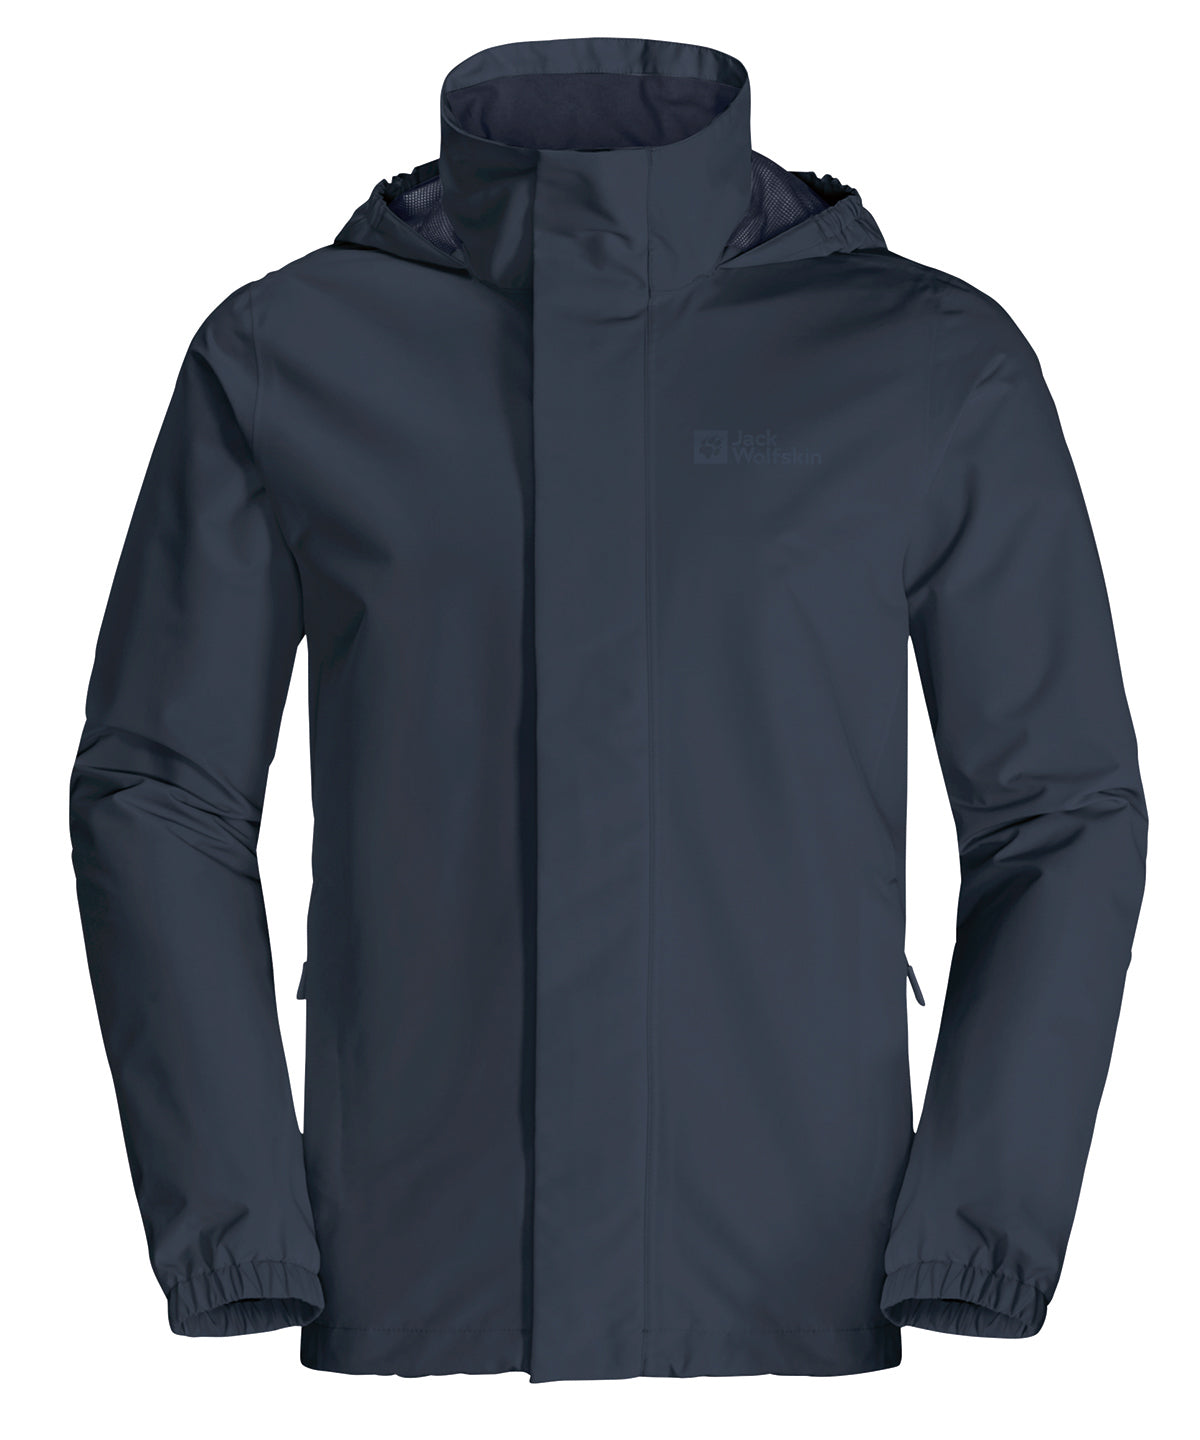 Personalised Jackets - Black Jack Wolfskin Waterproof jacket  (NL)